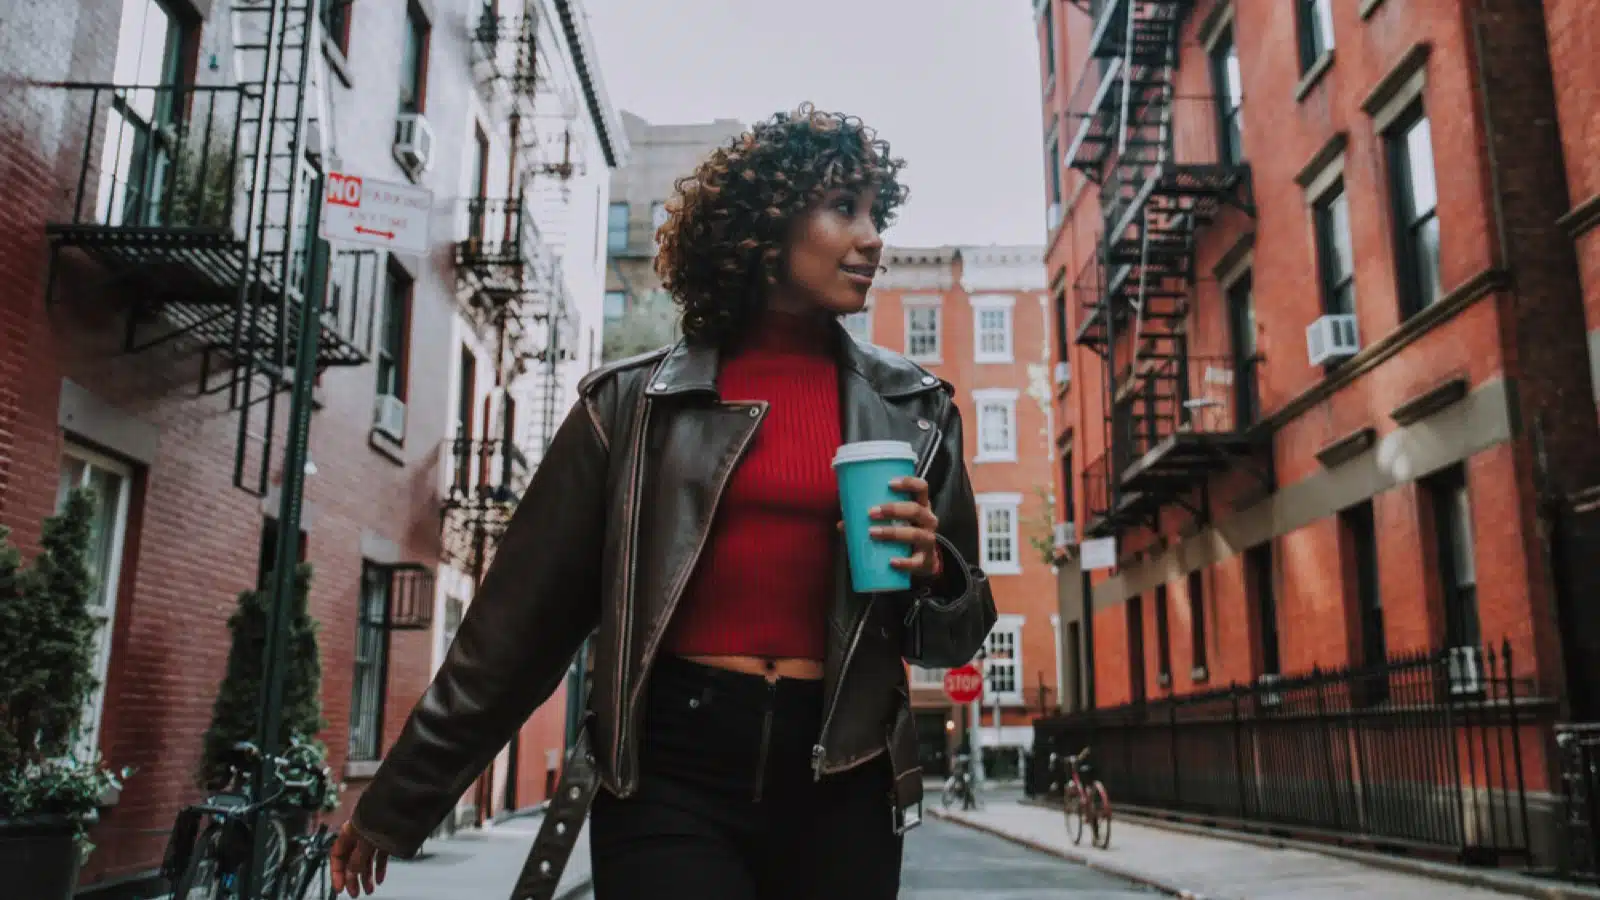 Traveler Woman walking in New York street